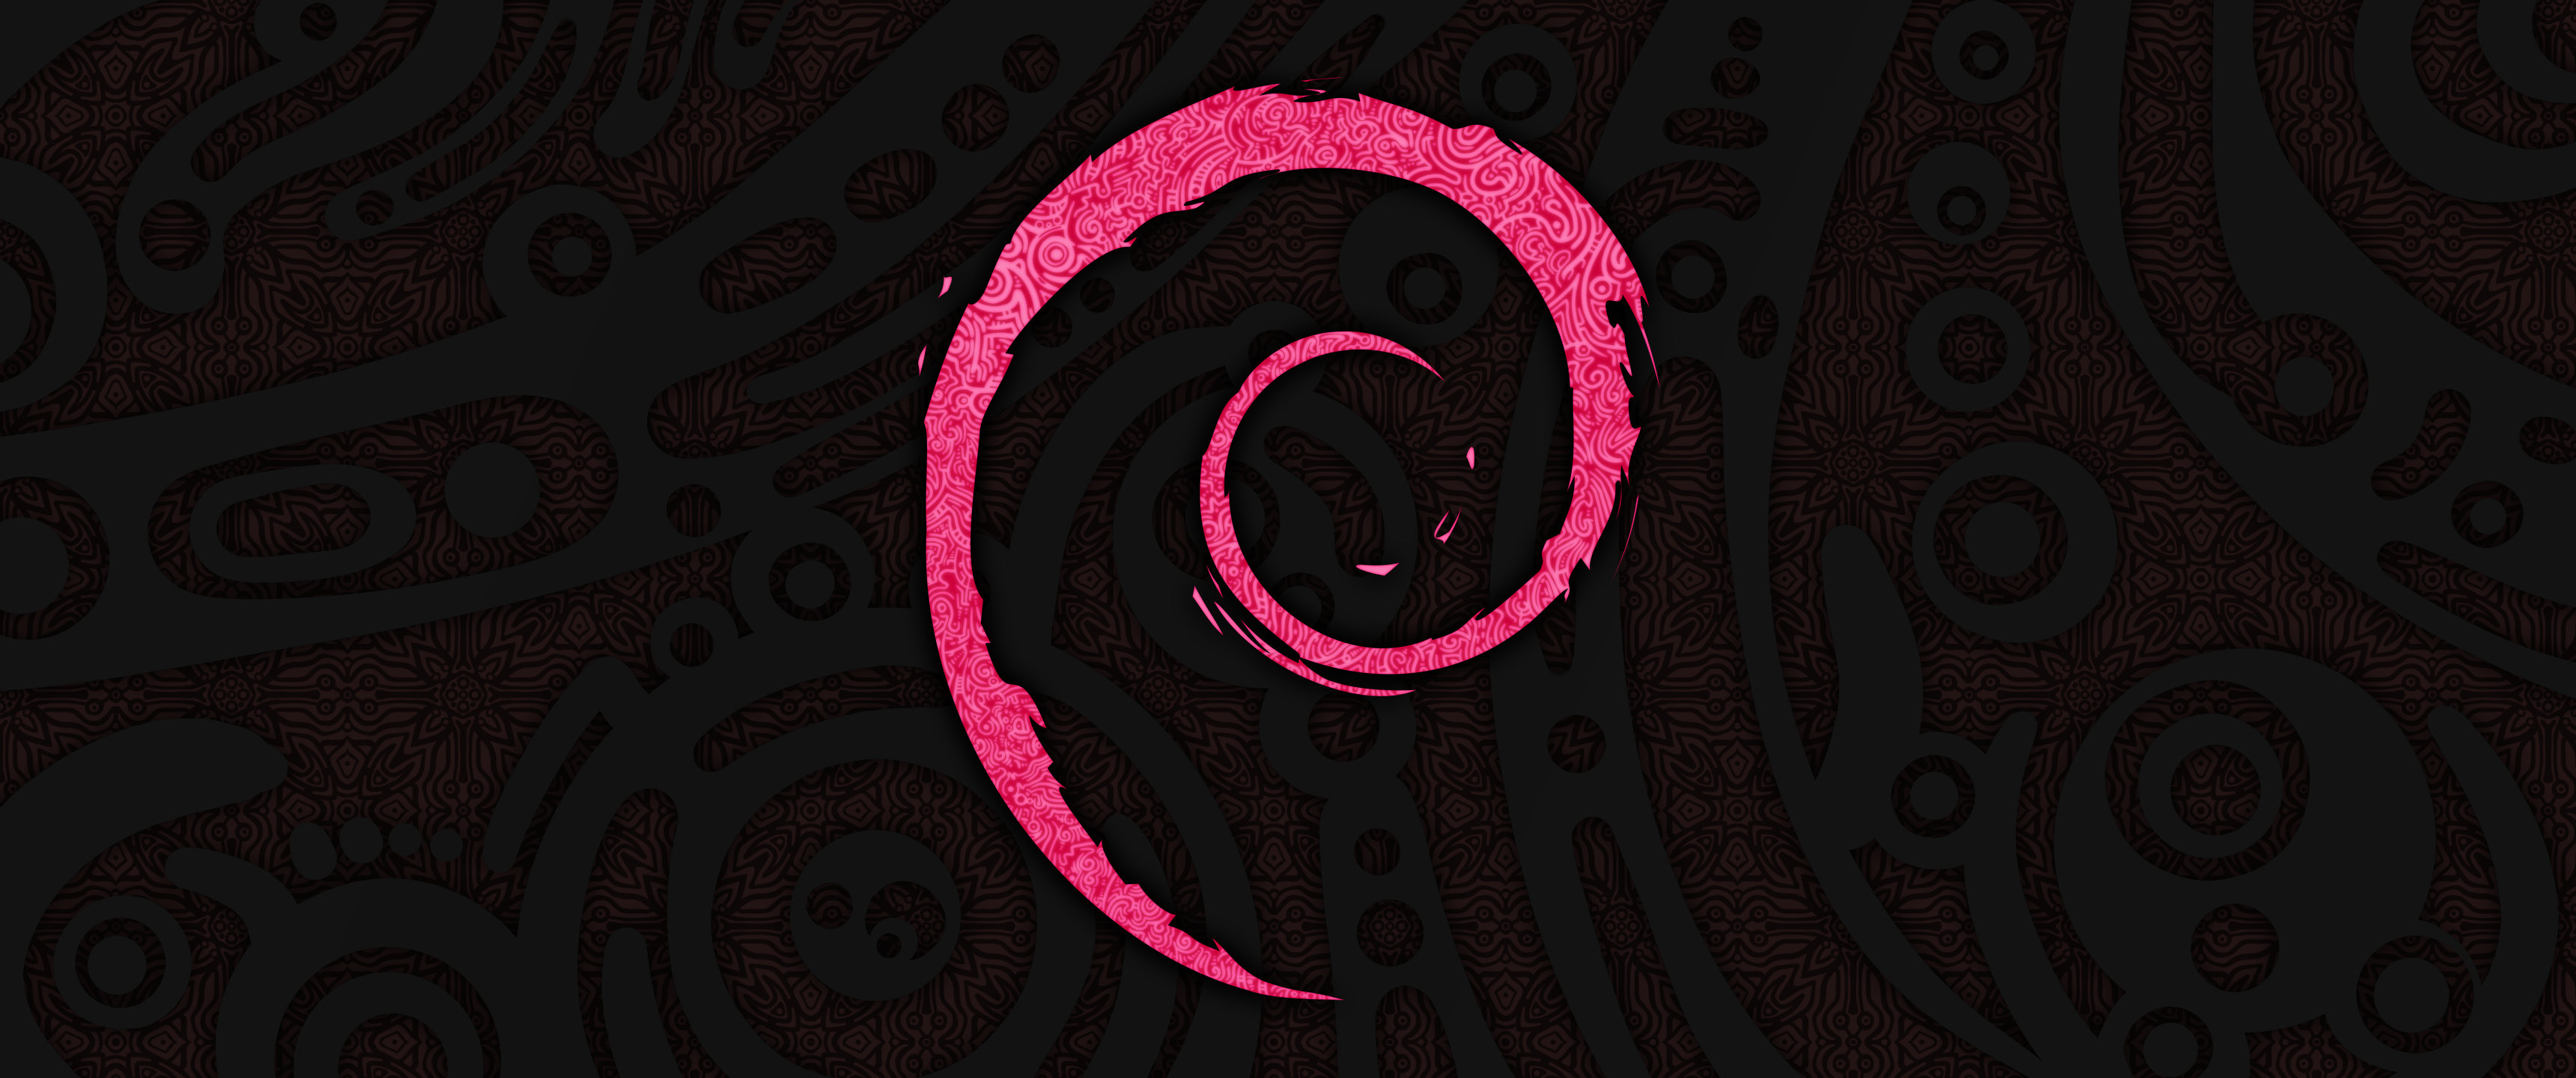 General 3440x1440 Debian Linux minimalism logo pink technology operating system digital art